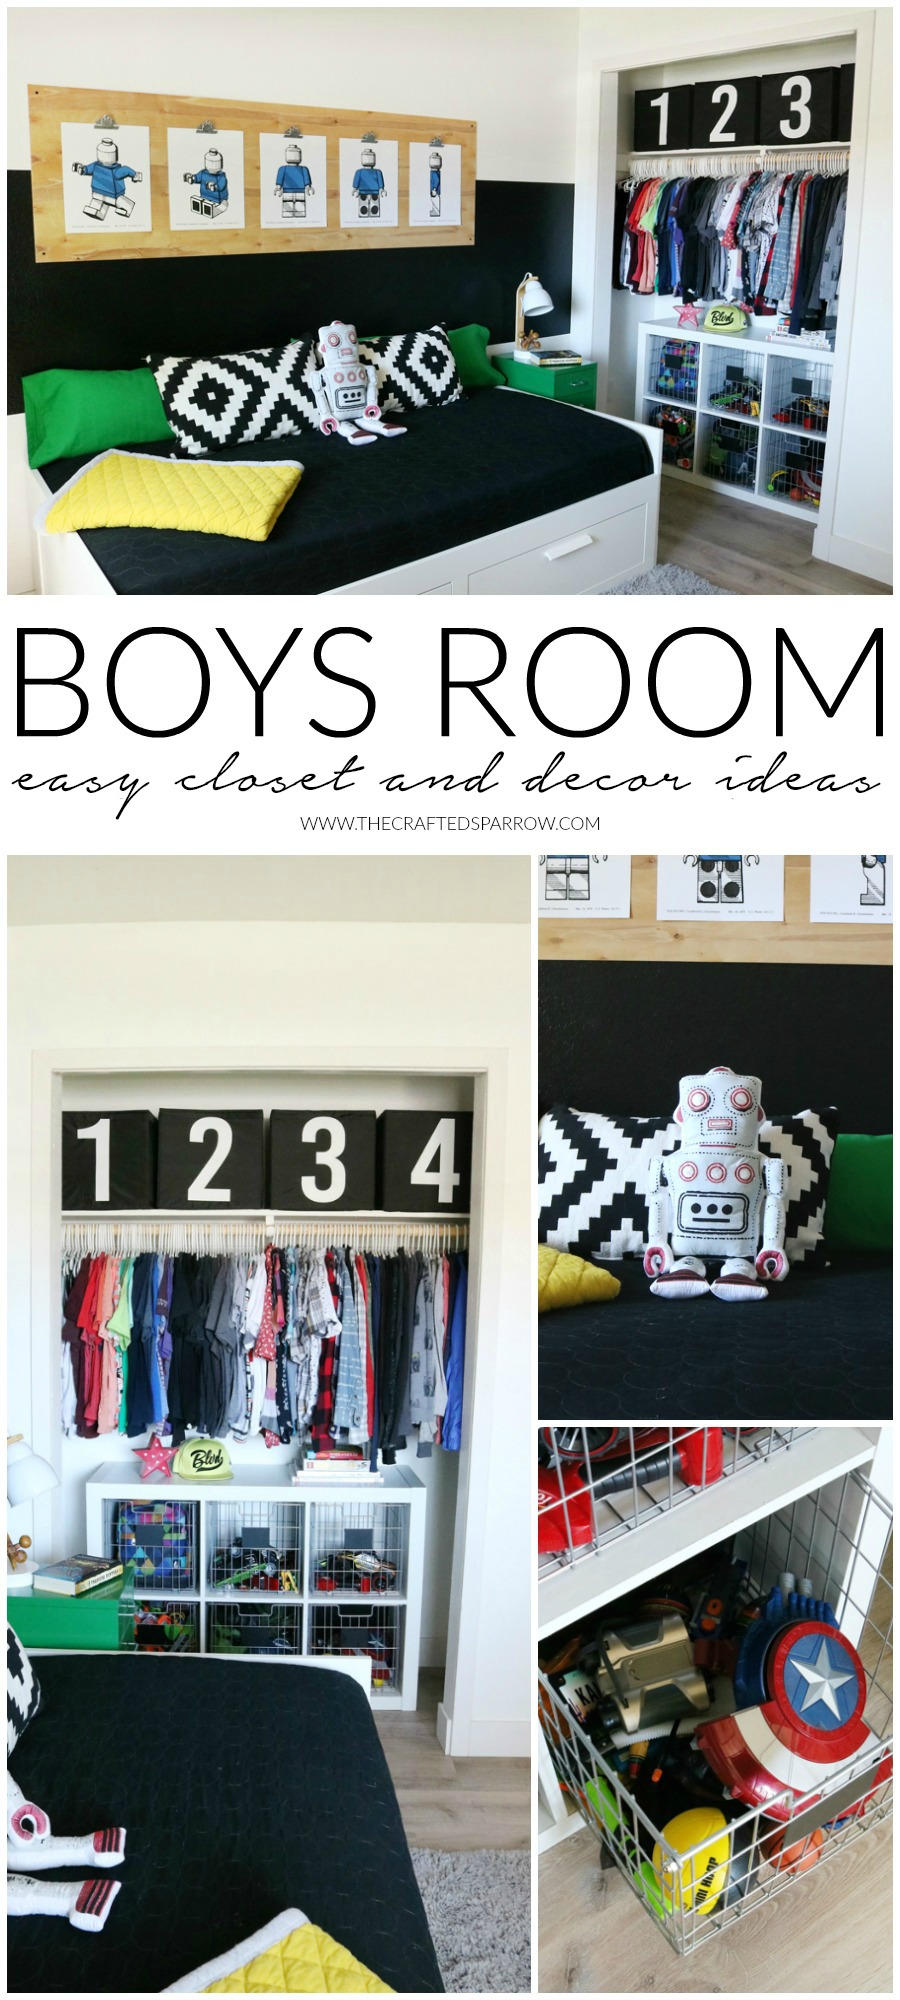 Boys Room Easy Closet Organization and Decor Ideas